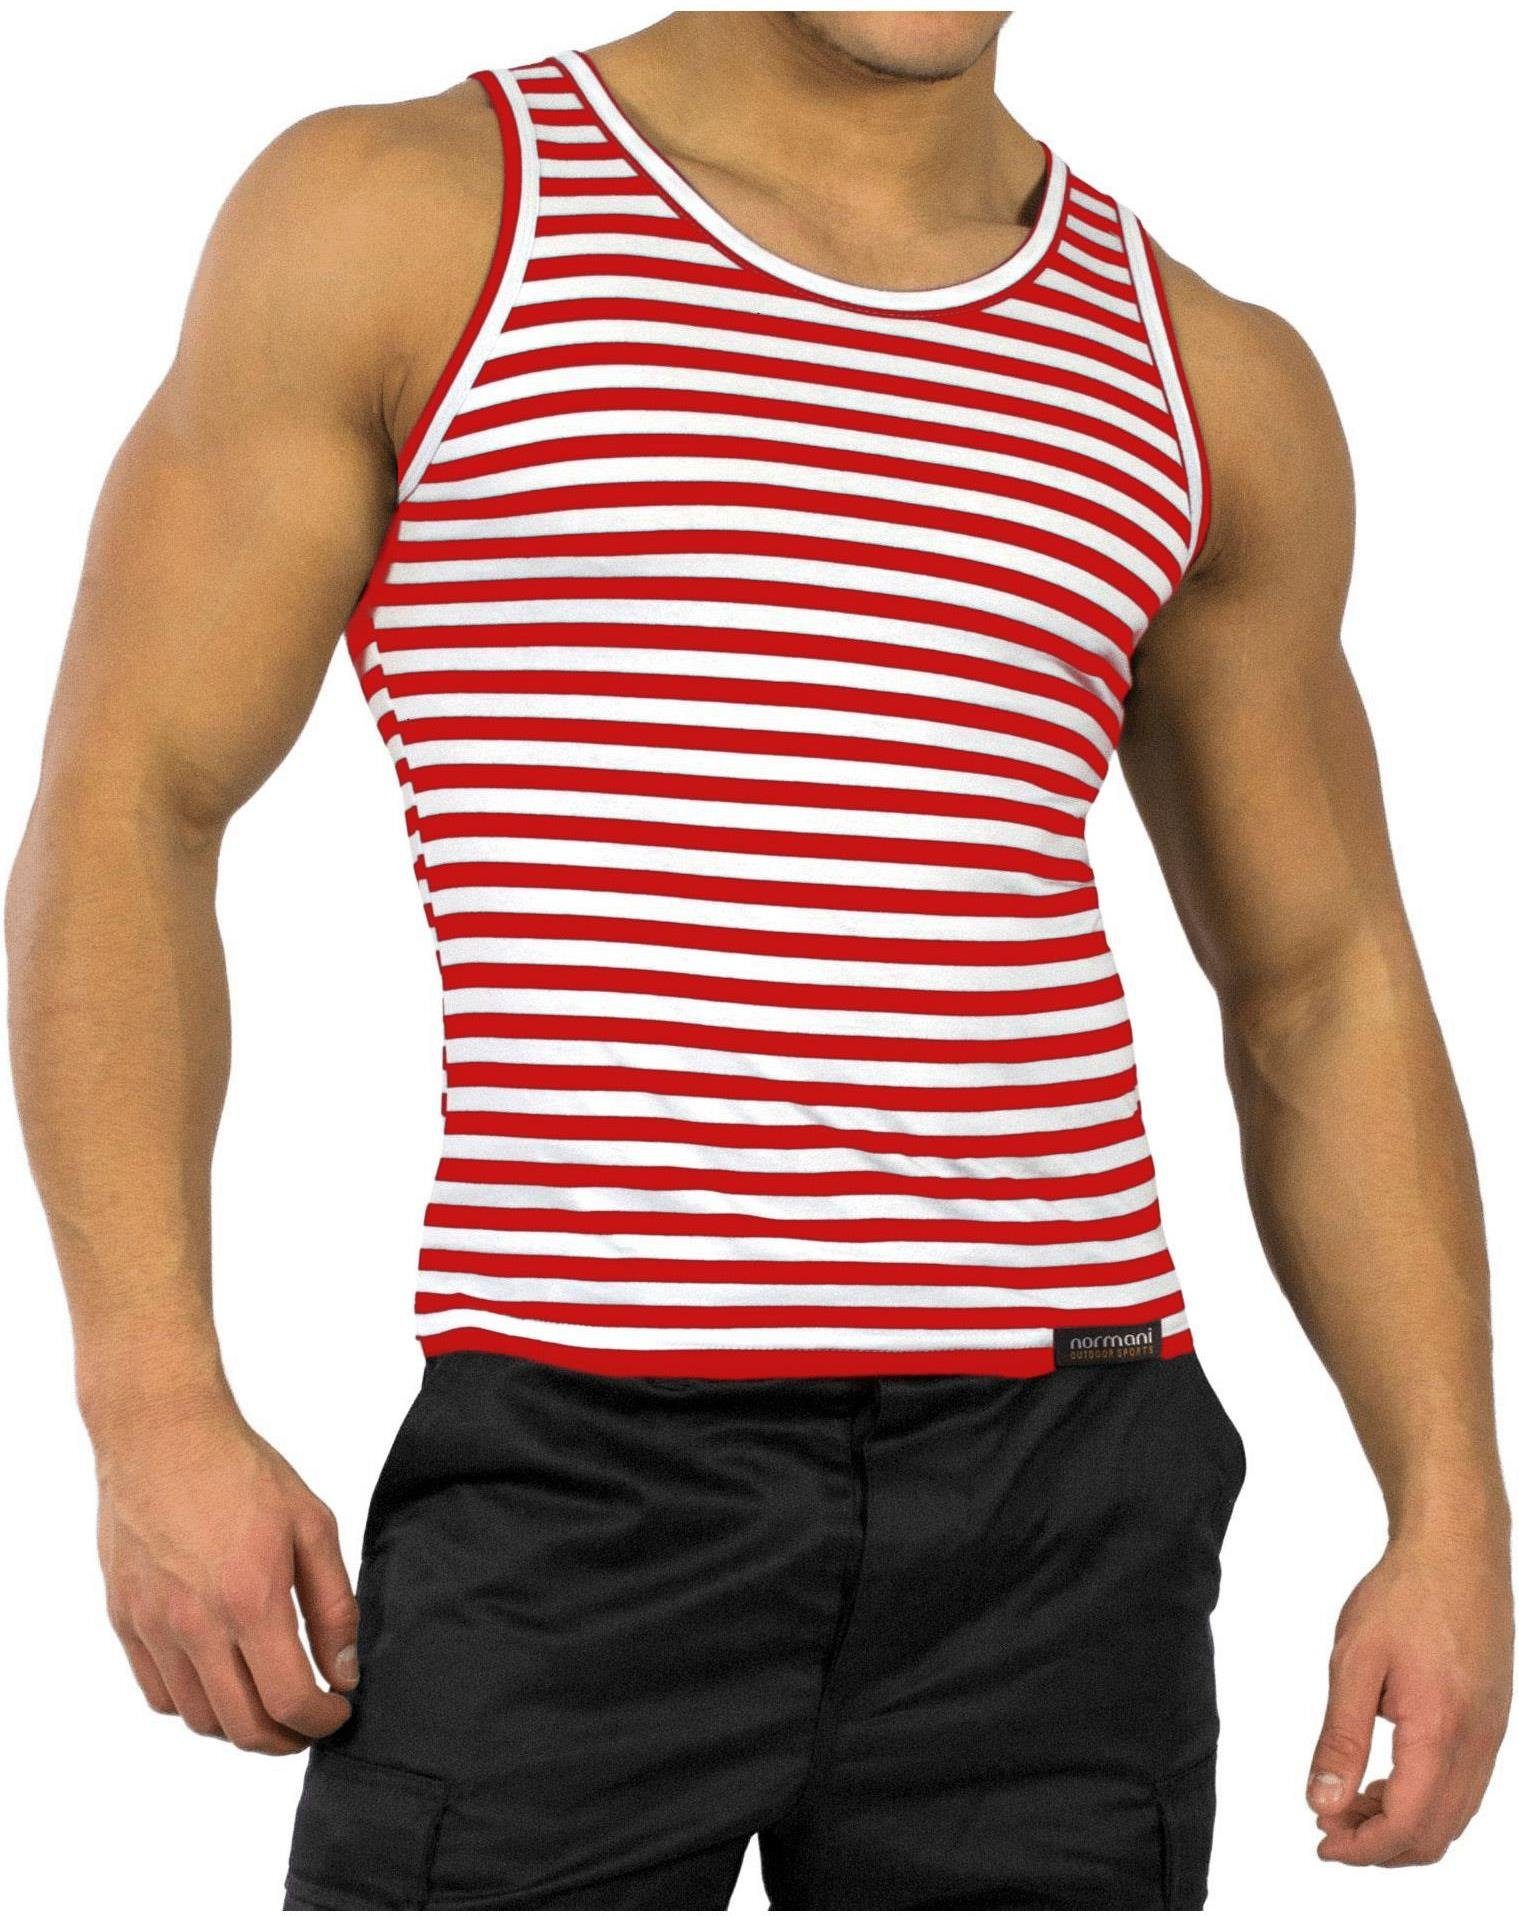 Tank-Top Tanktop Casual Rot/Weiß T-Shirts Classic Ärmelloses Sommer normani Marine Shirt Wolgadelta Unterhemd Rundhals